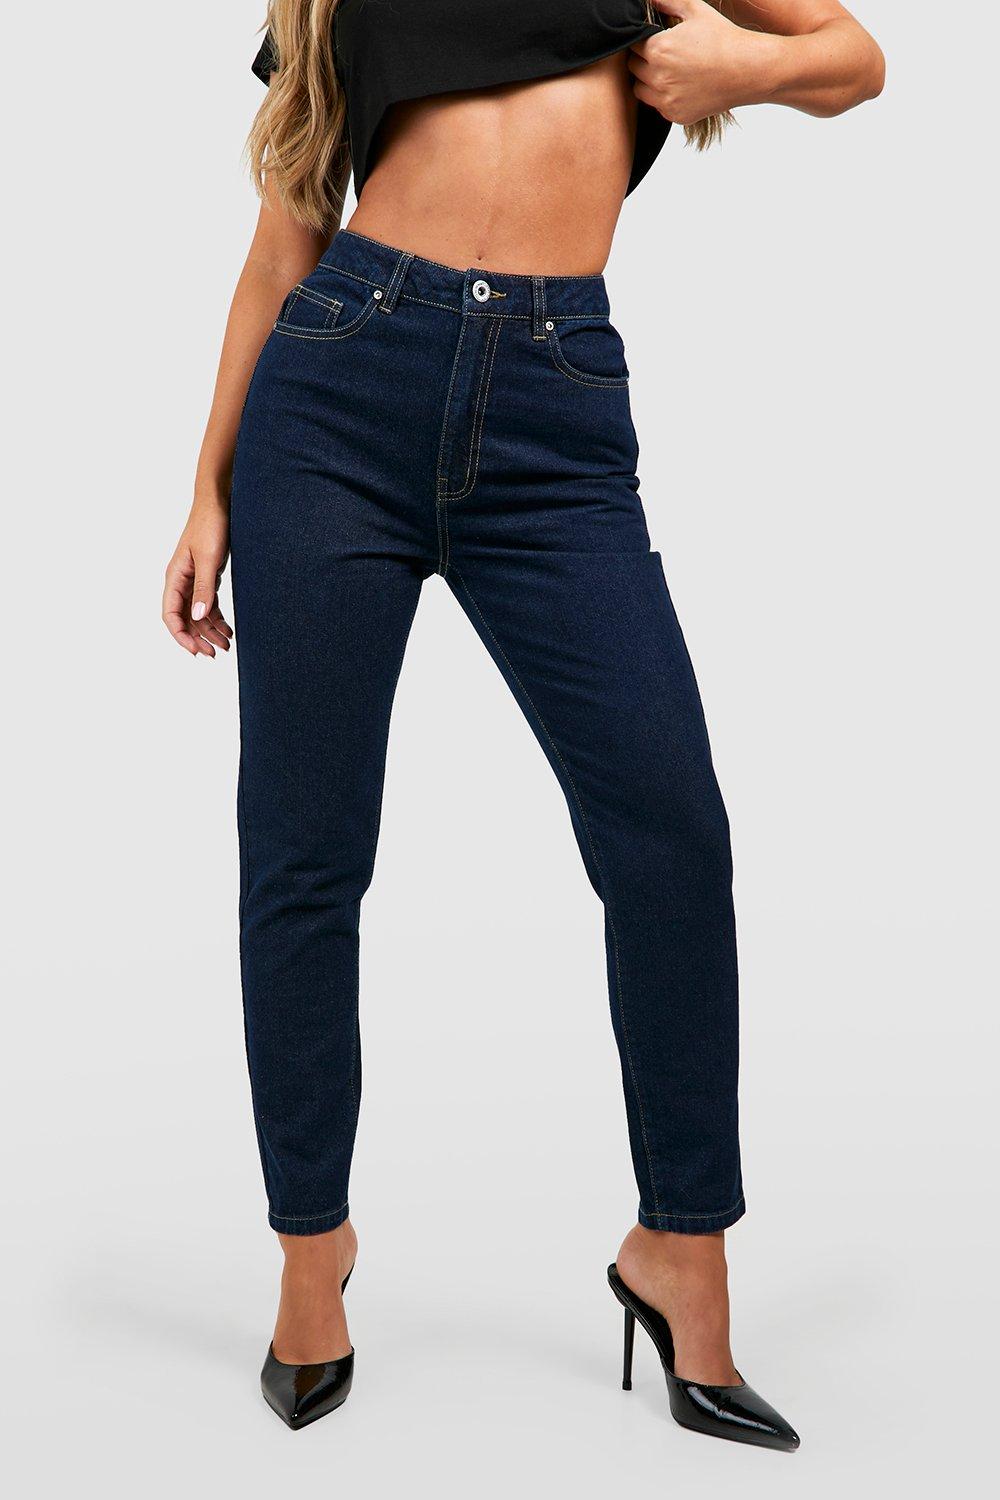 Basics High Waisted Slim Fit Mom Jeans